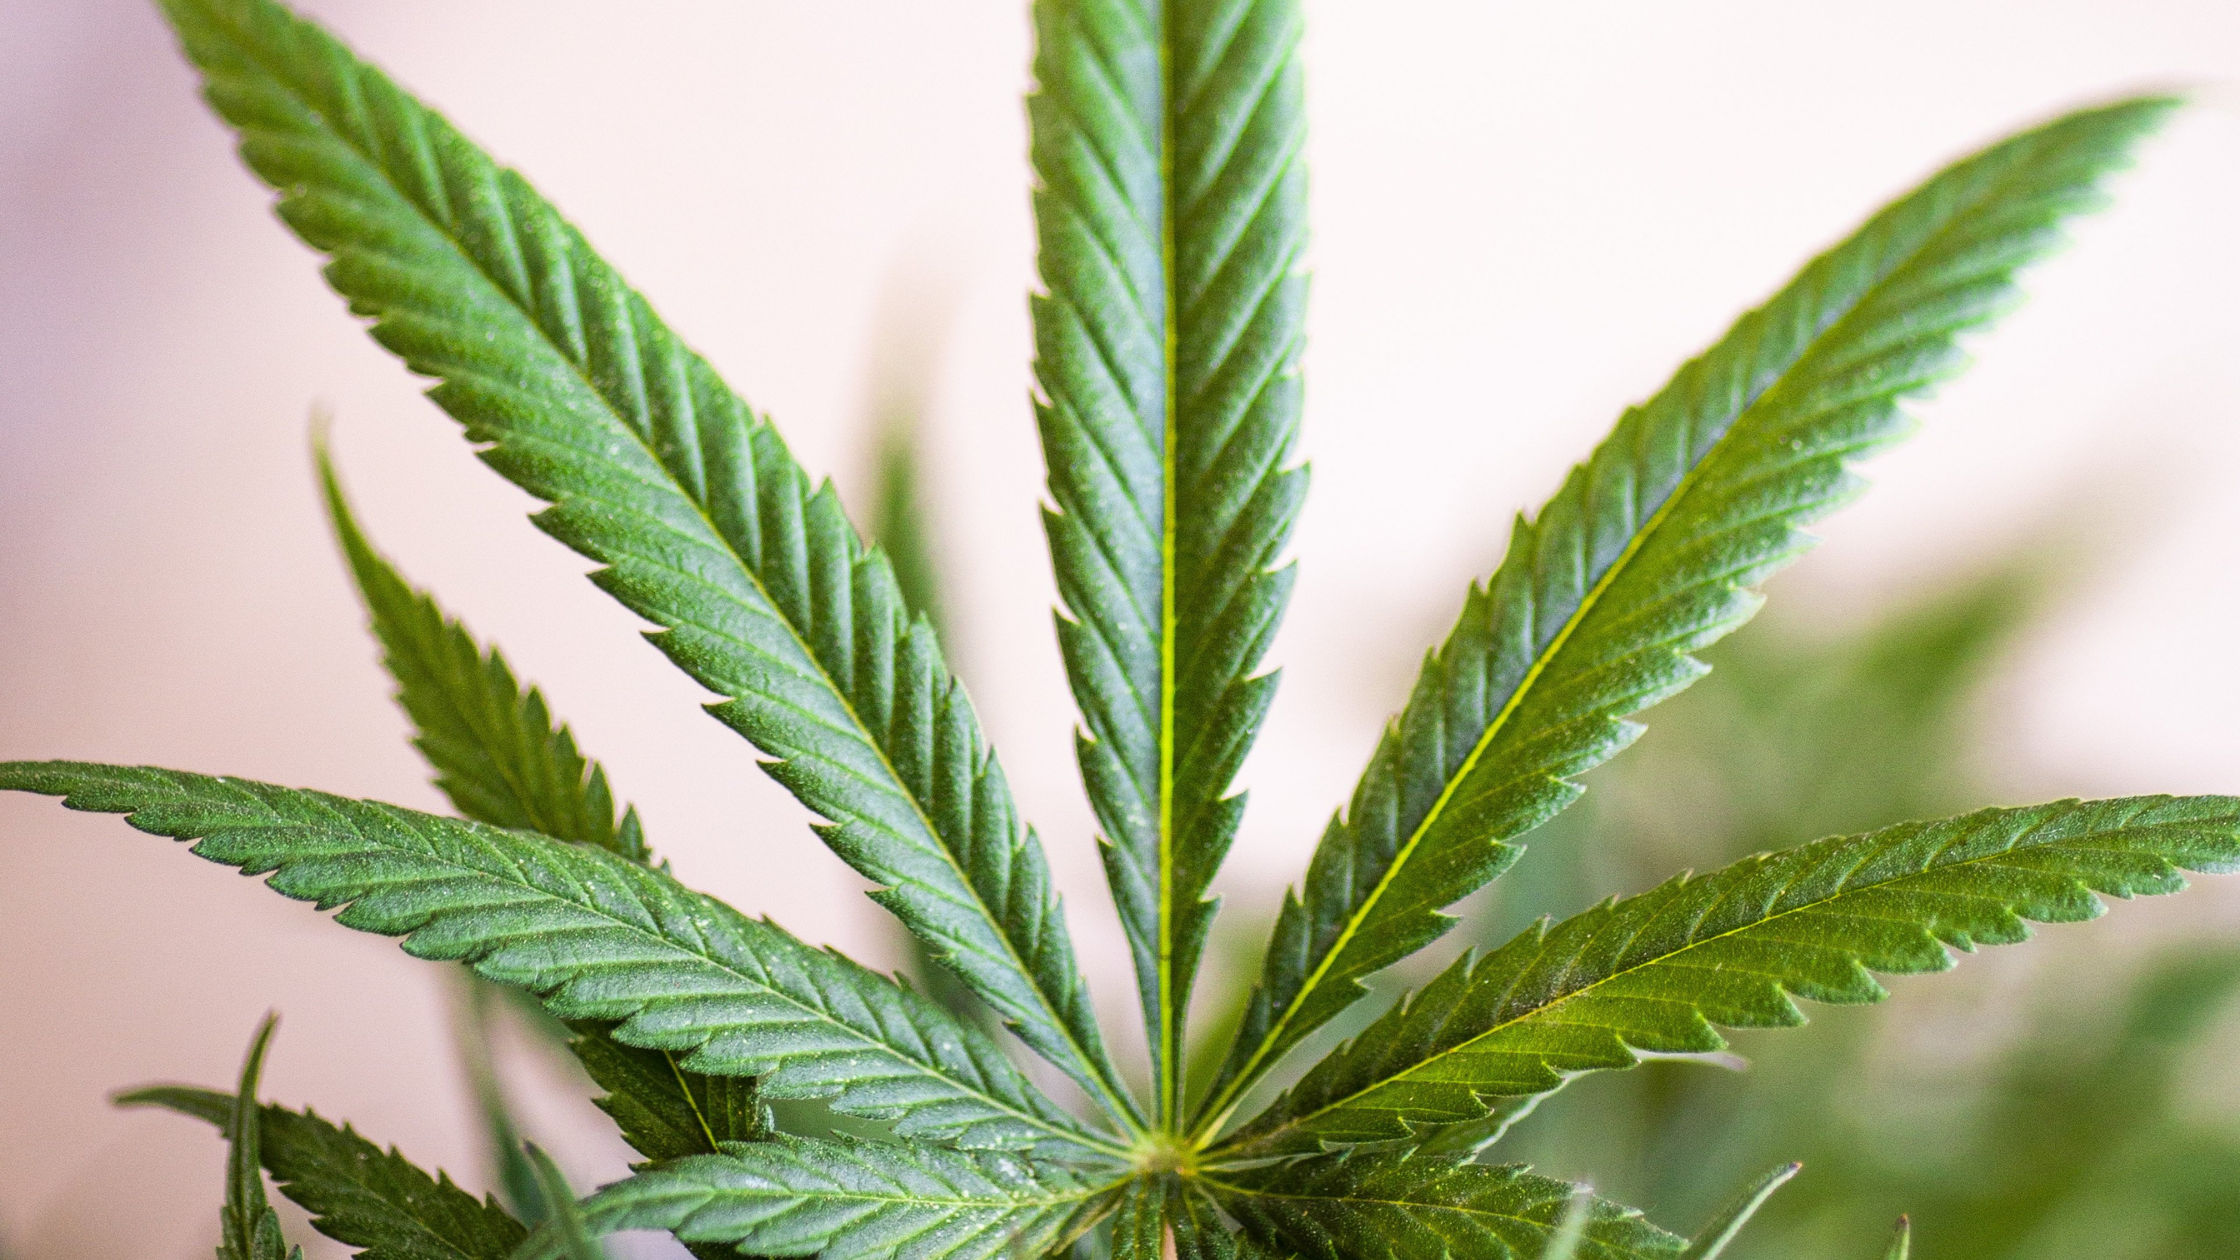 Is marijuana legal in Alabama?